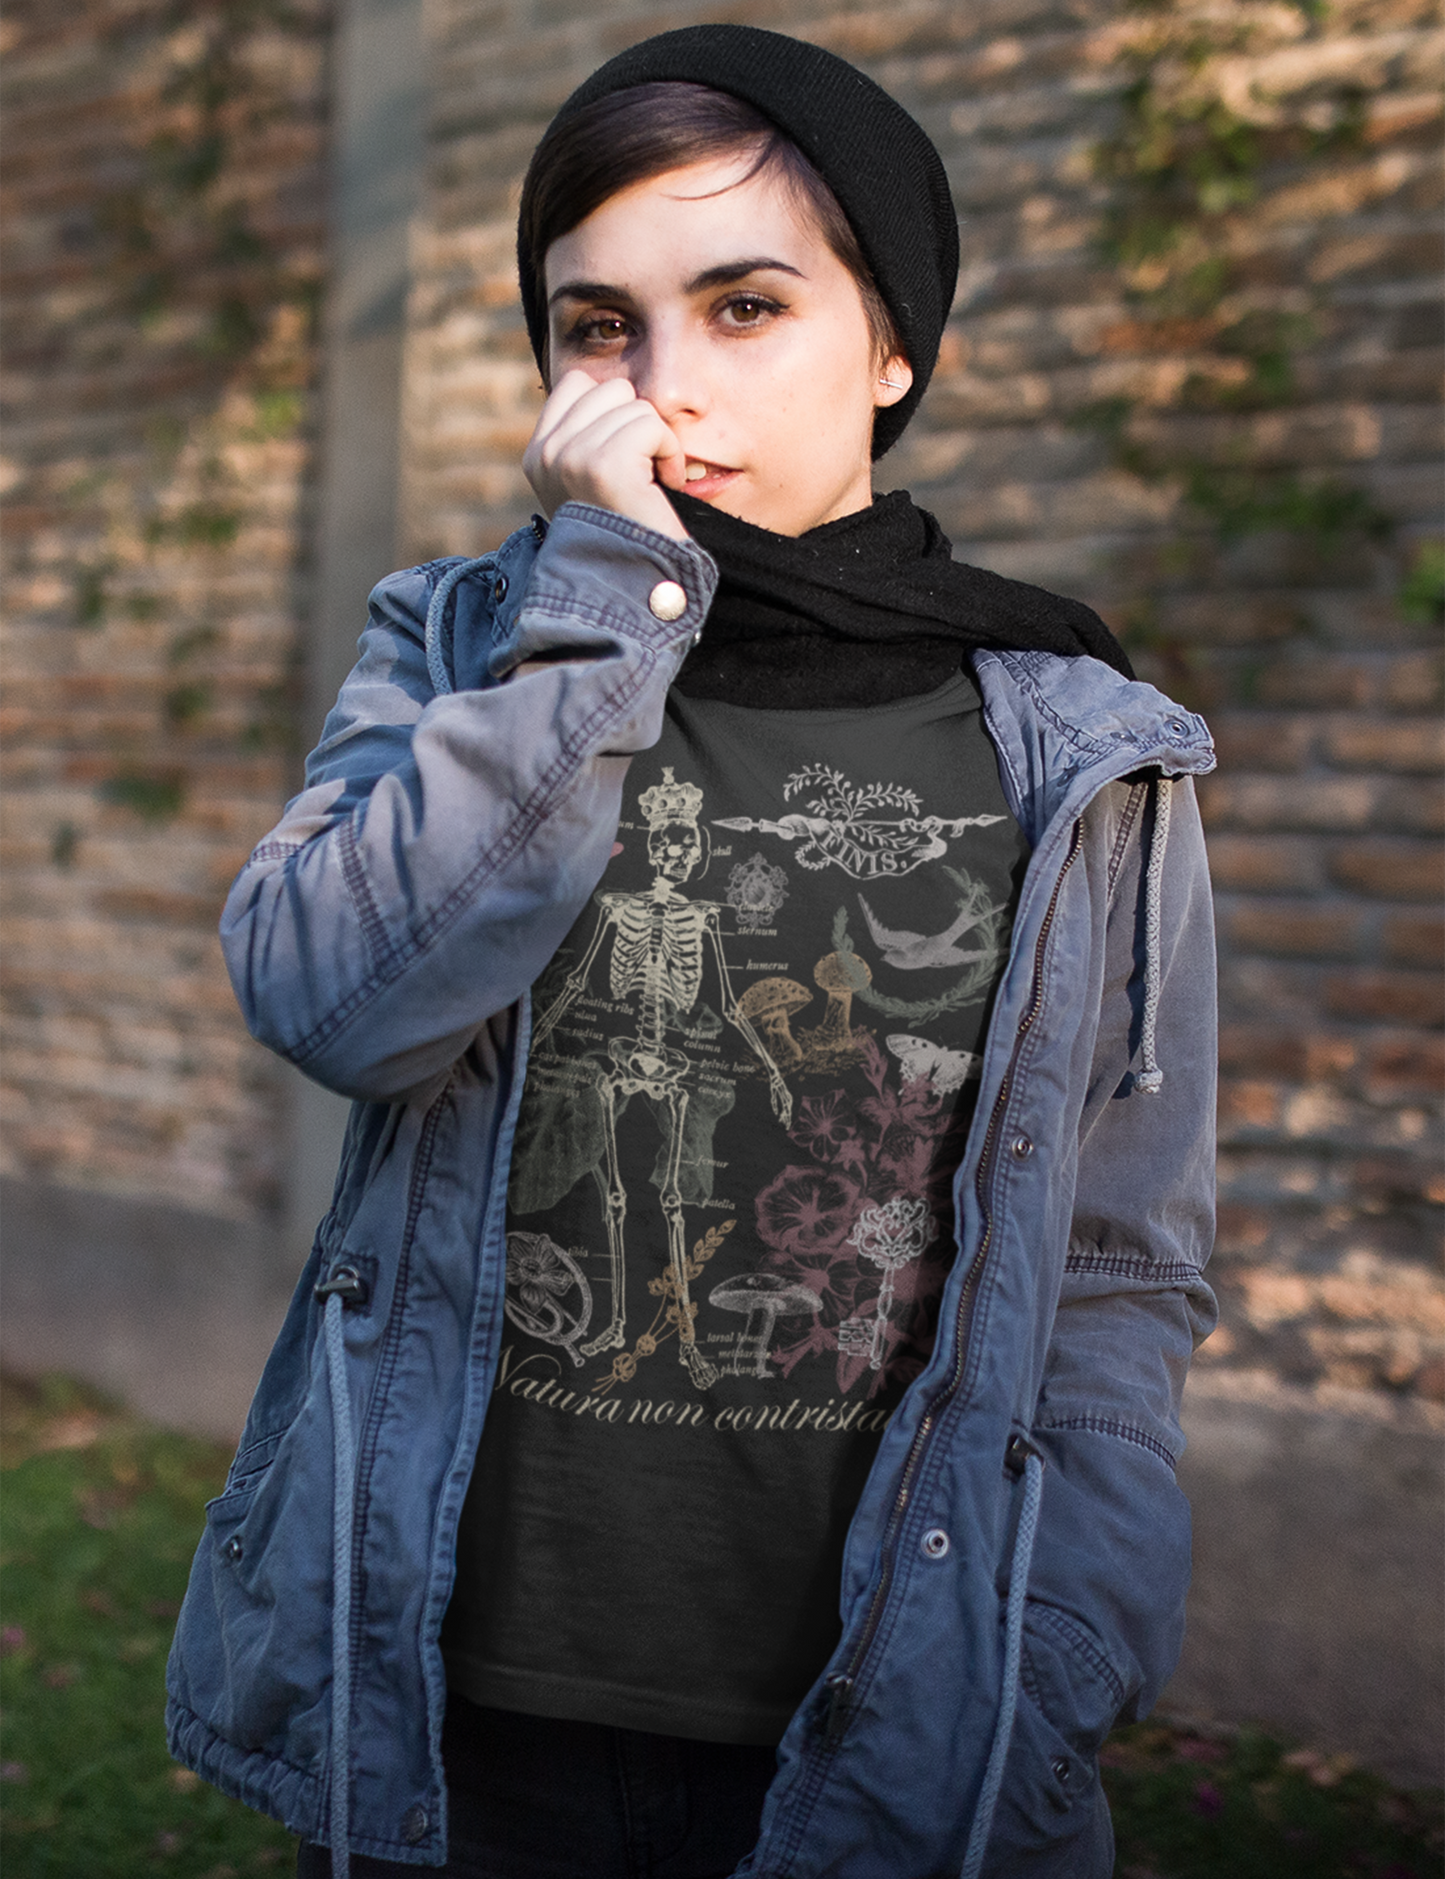 Grunge Academia Aesthetic Outfits Skeleton Goth Shirt